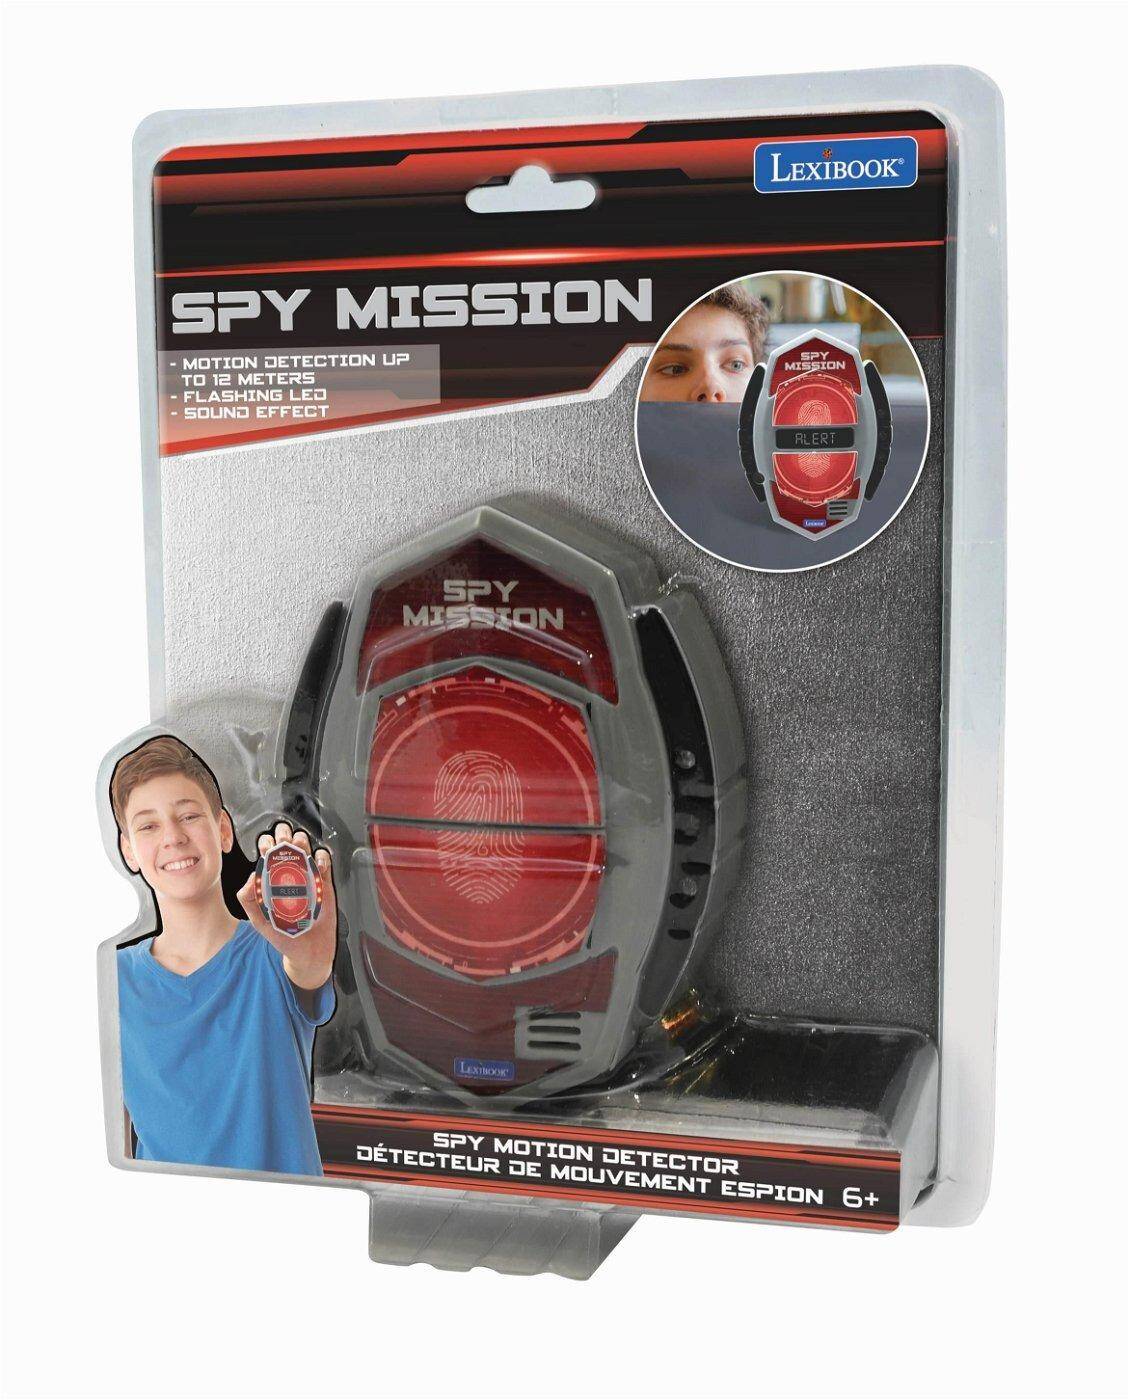 Detektor ruchu Spy Mission Lexibook RPSPY05